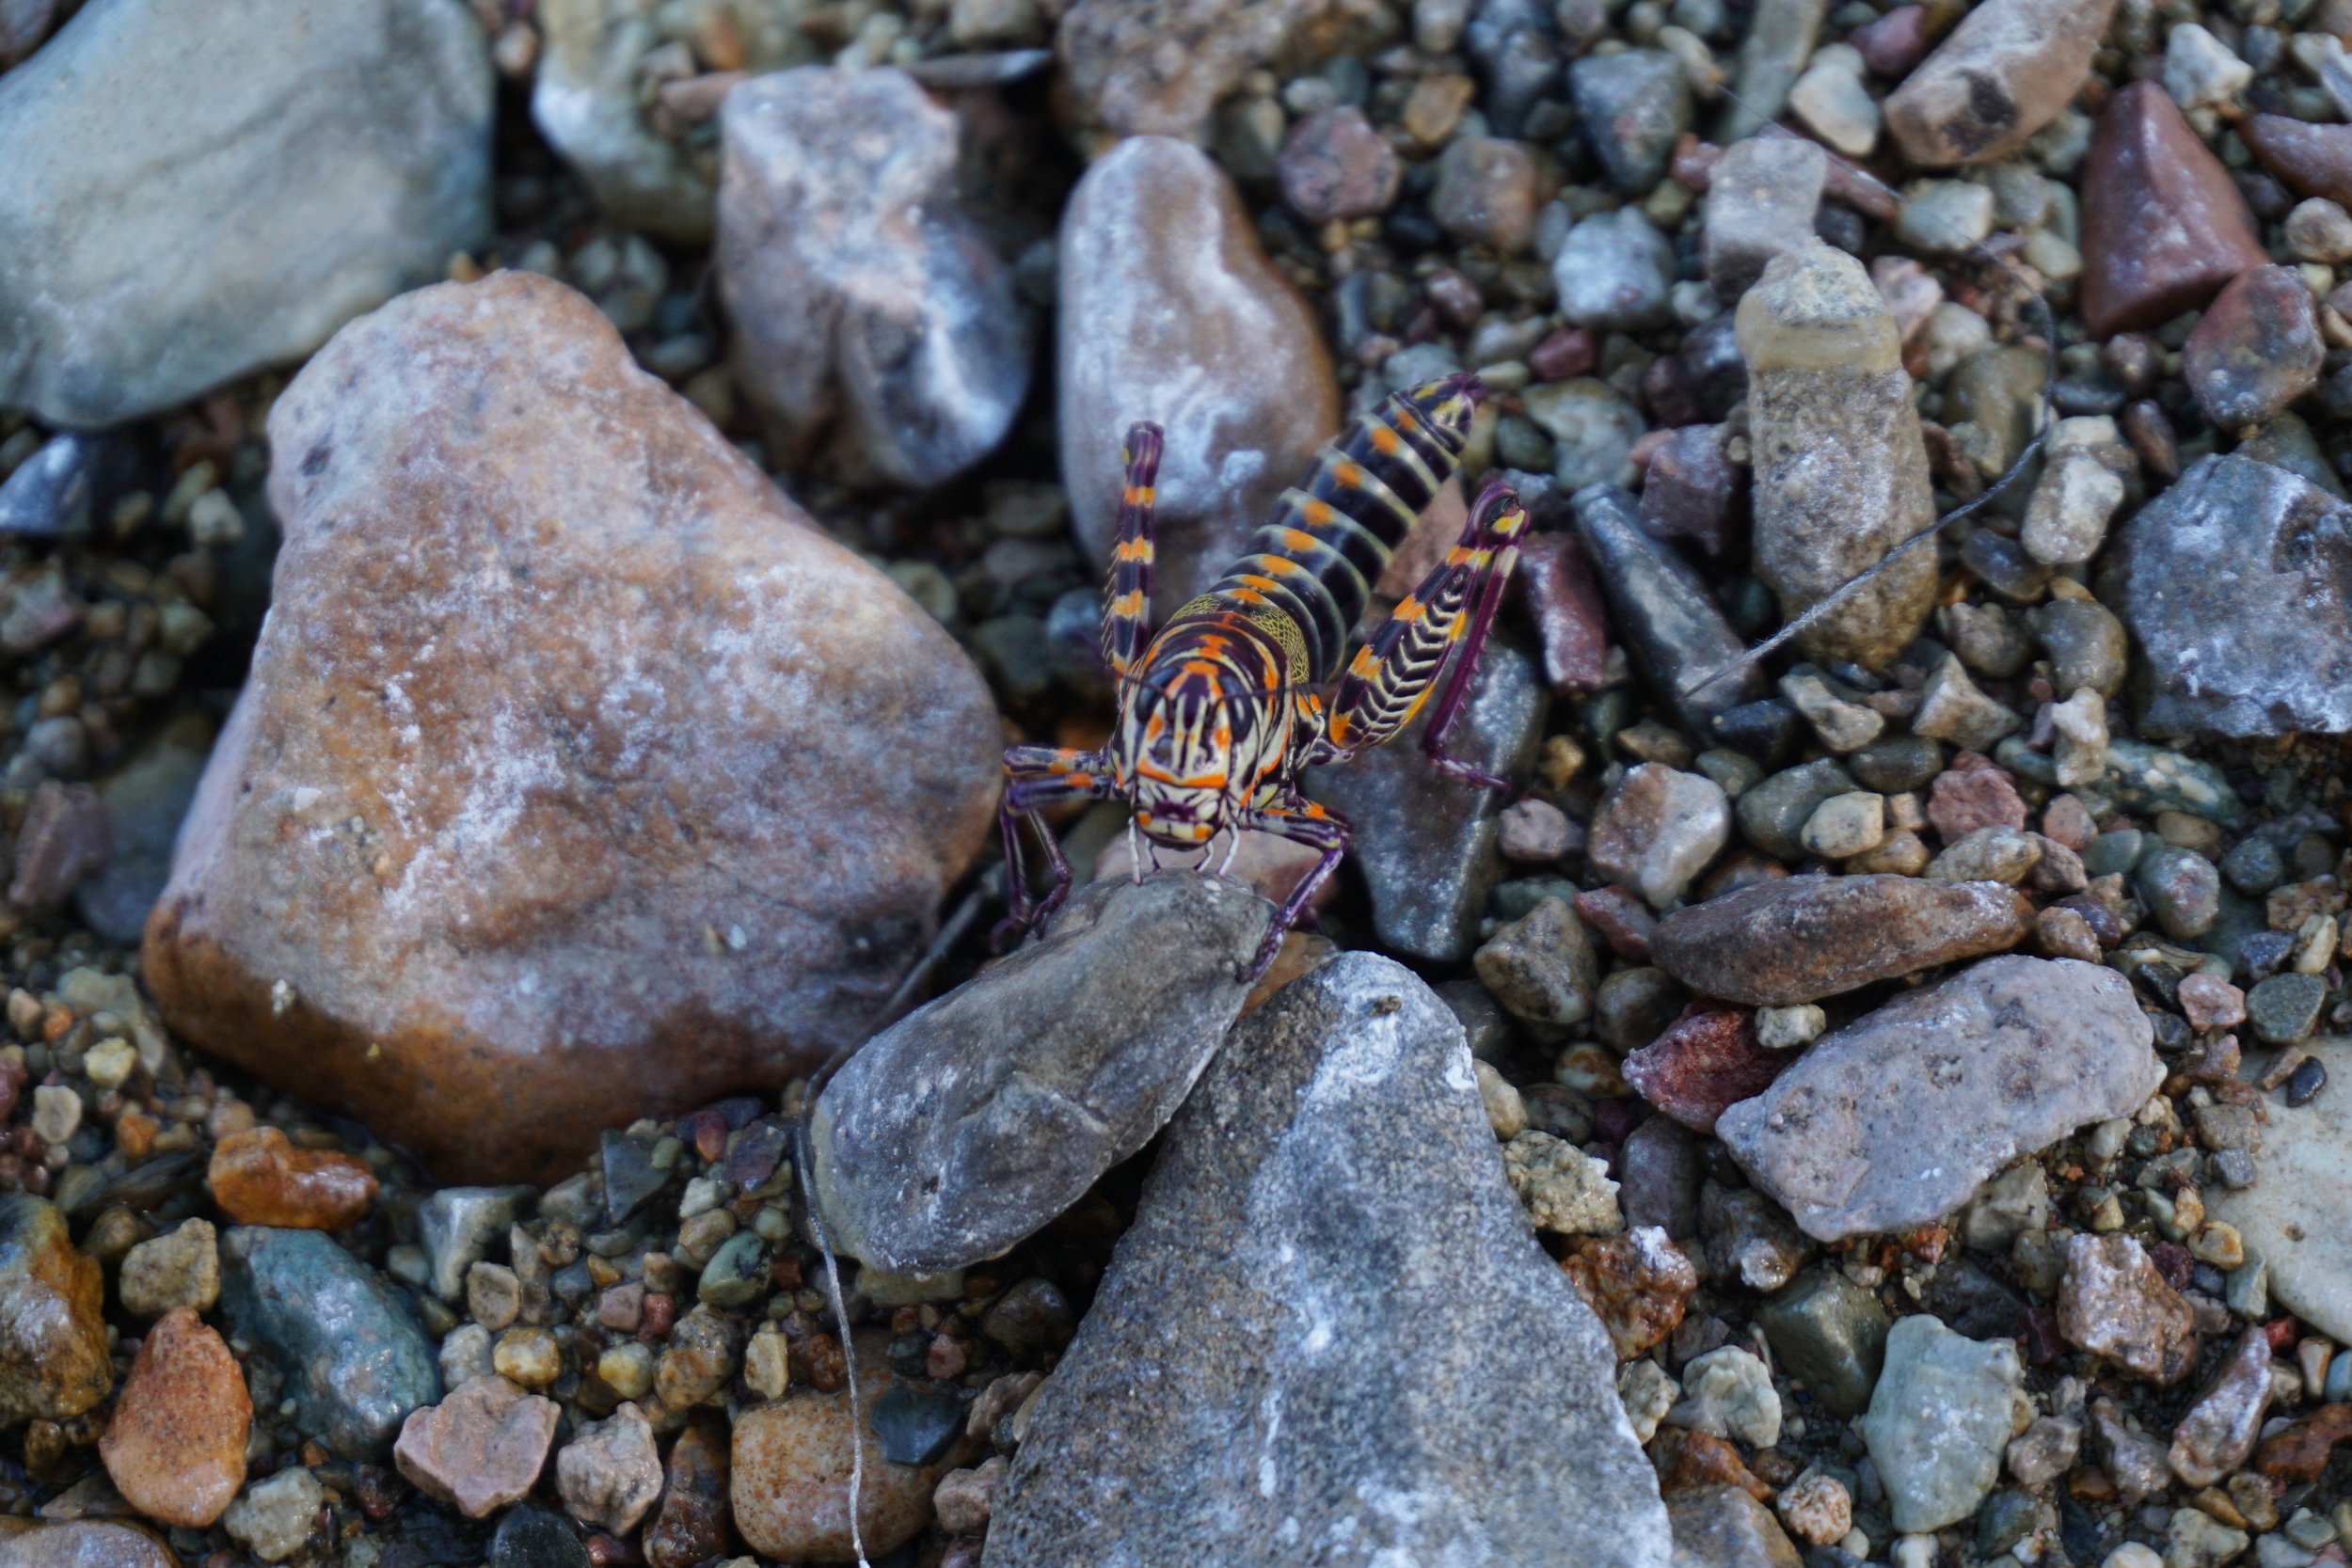 A colorful grasshopper on rocks